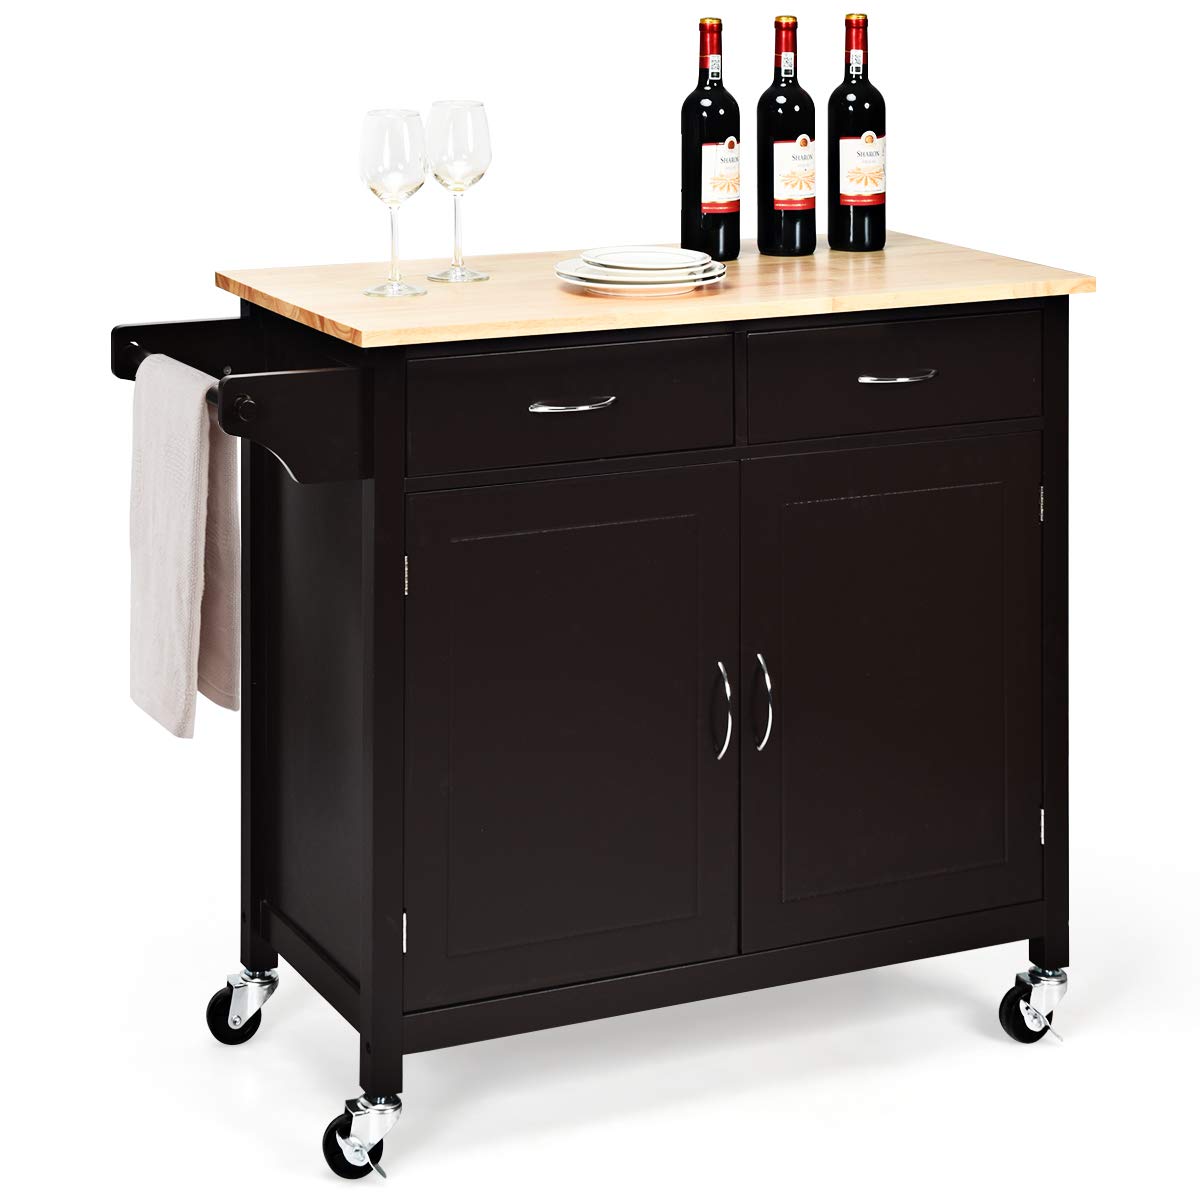 Giantex Kitchen Island, Rolling Kitchen Cart, Wood Counter Top, Bar Dining Room Organizer Furniture, White